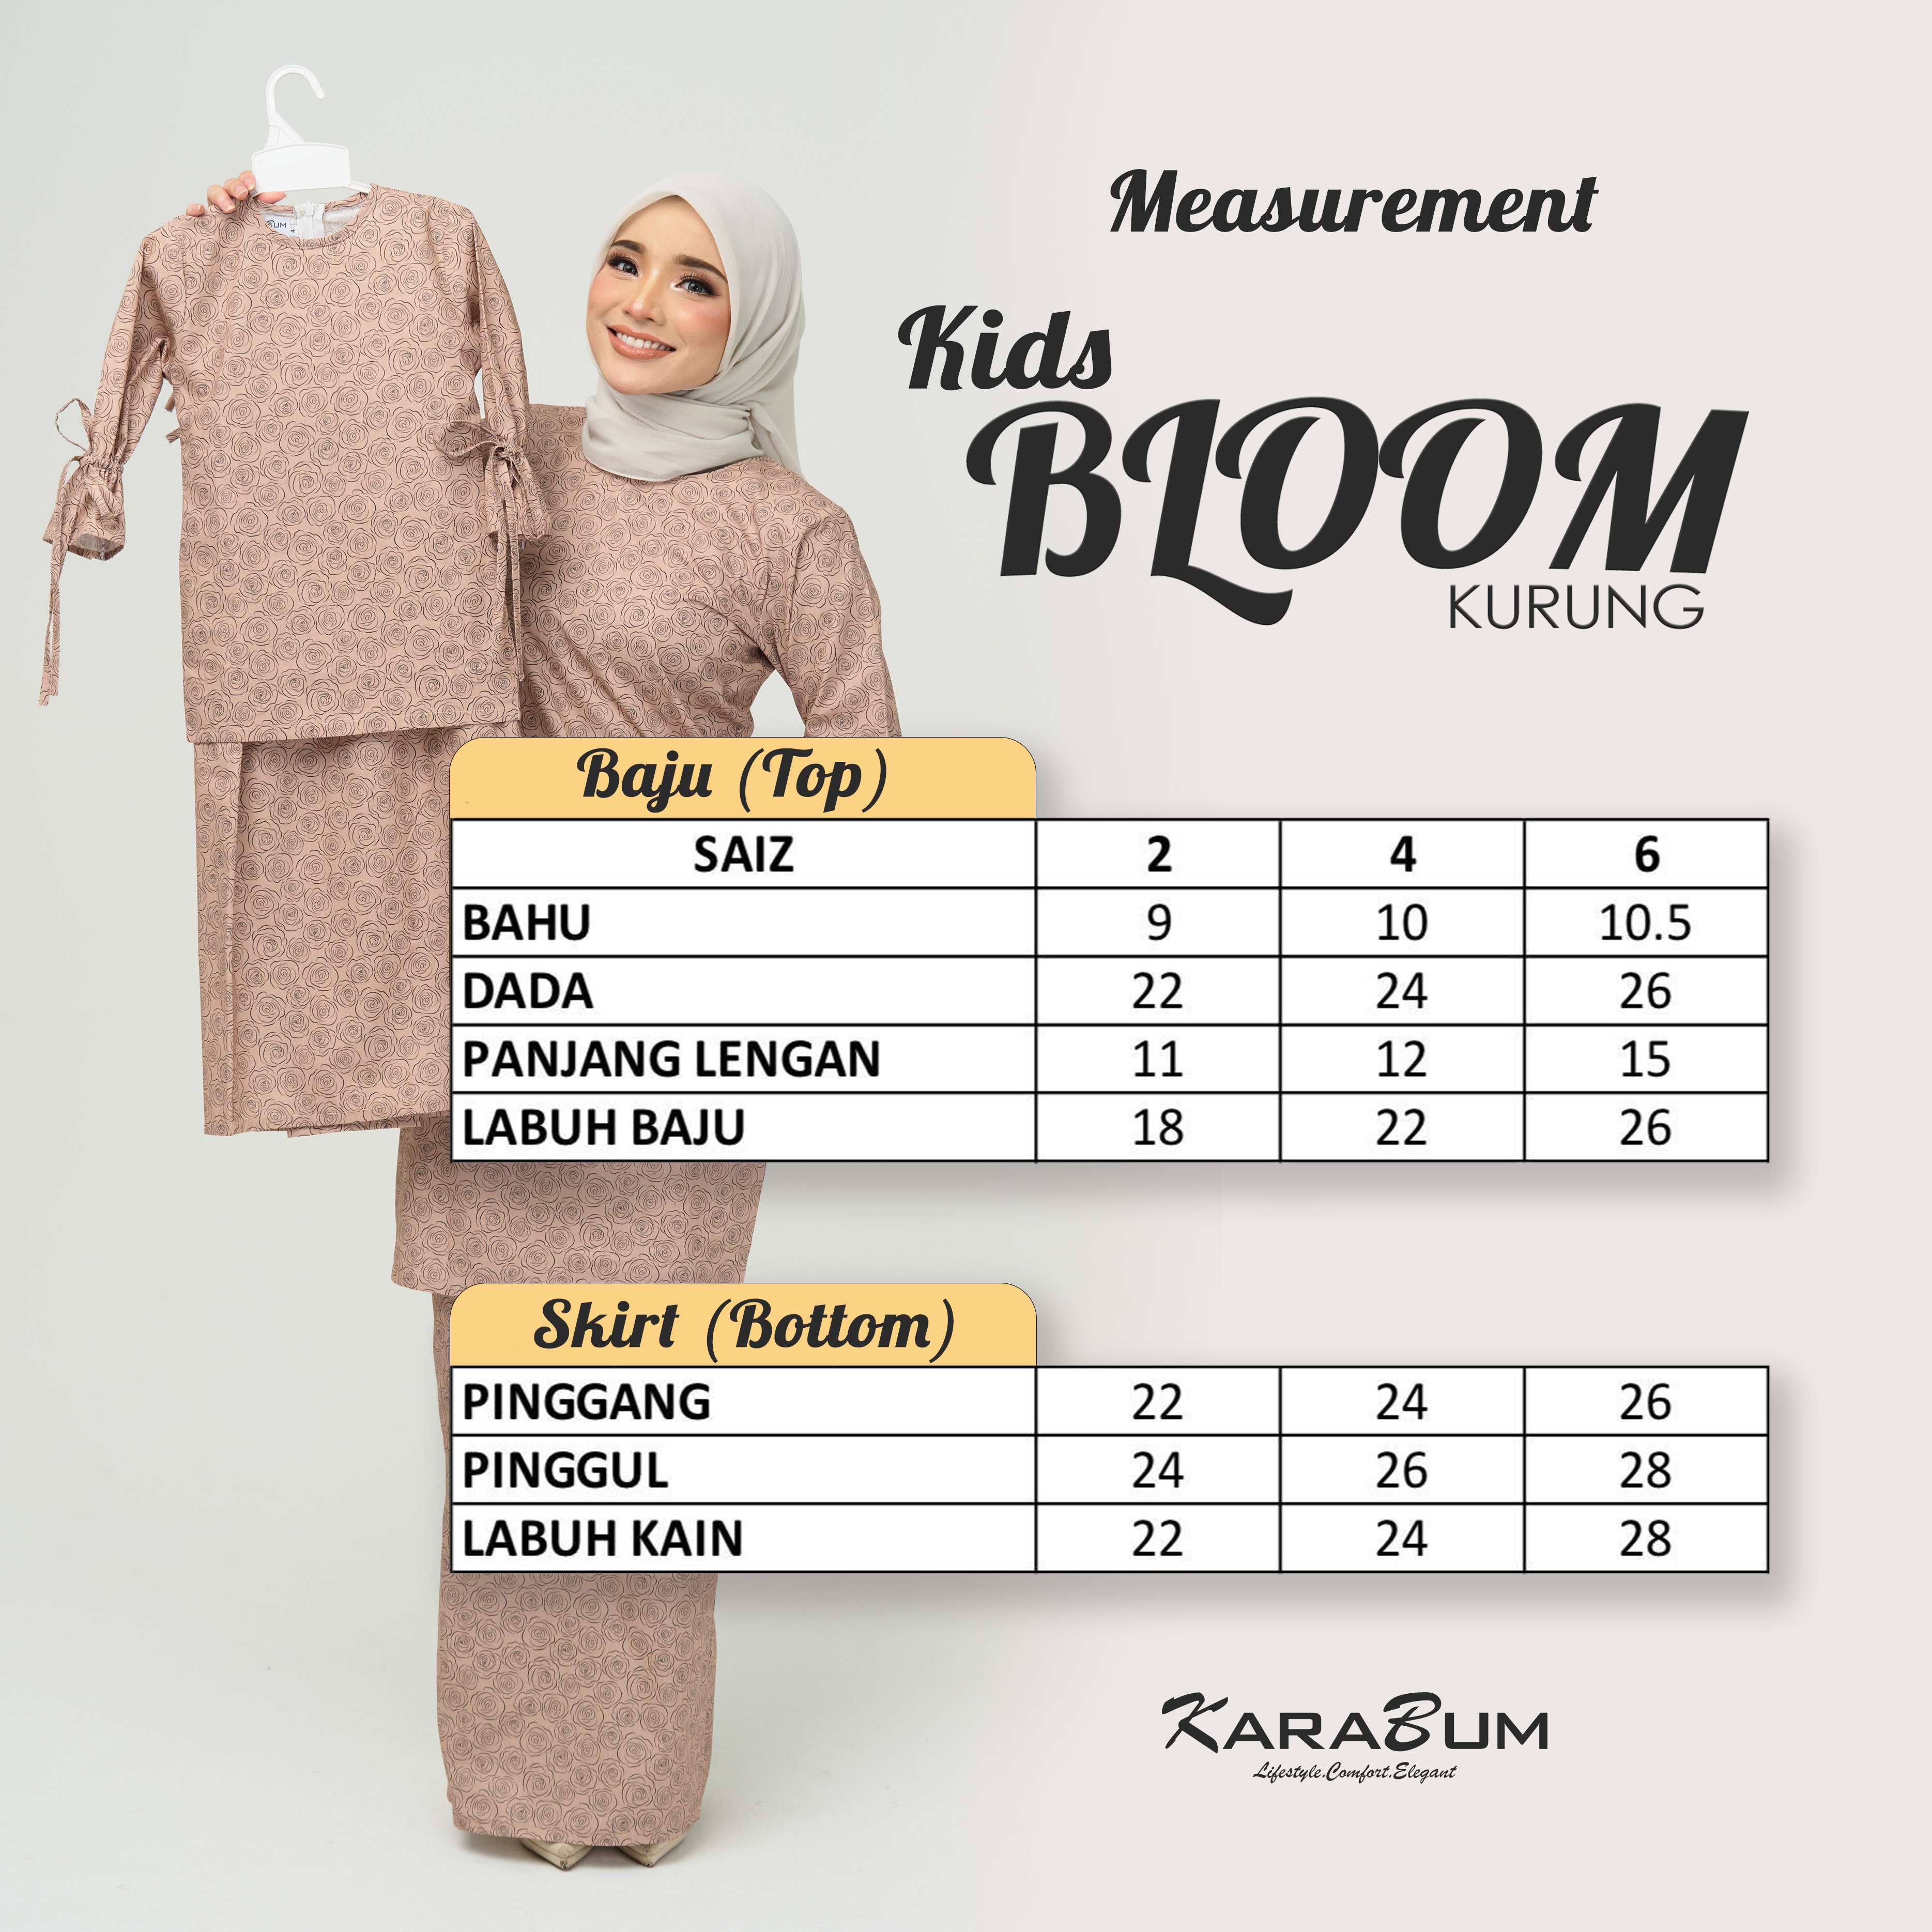 Measurement Kids Bloom Kurung